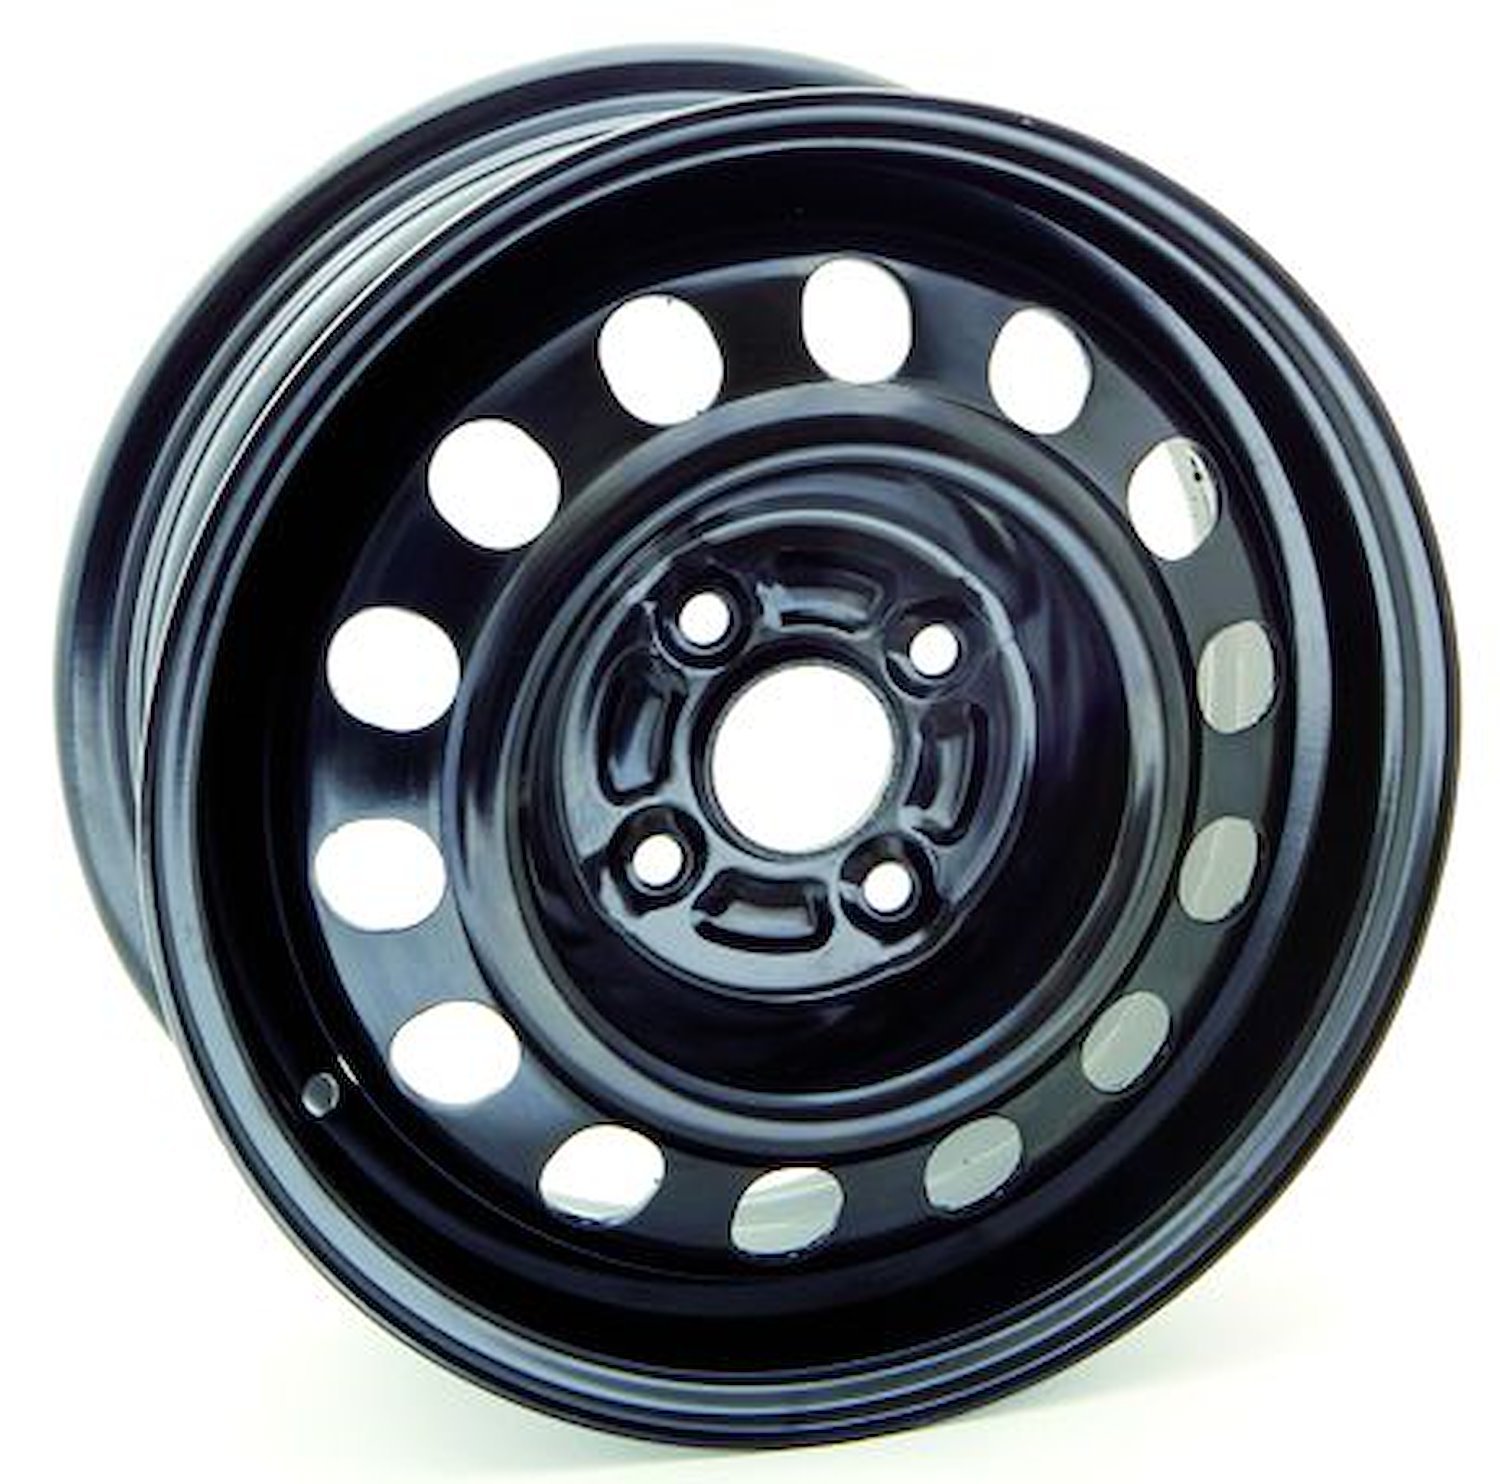 X40720 Steel Wheel [Size: 14" x 5.50"] Black Finish